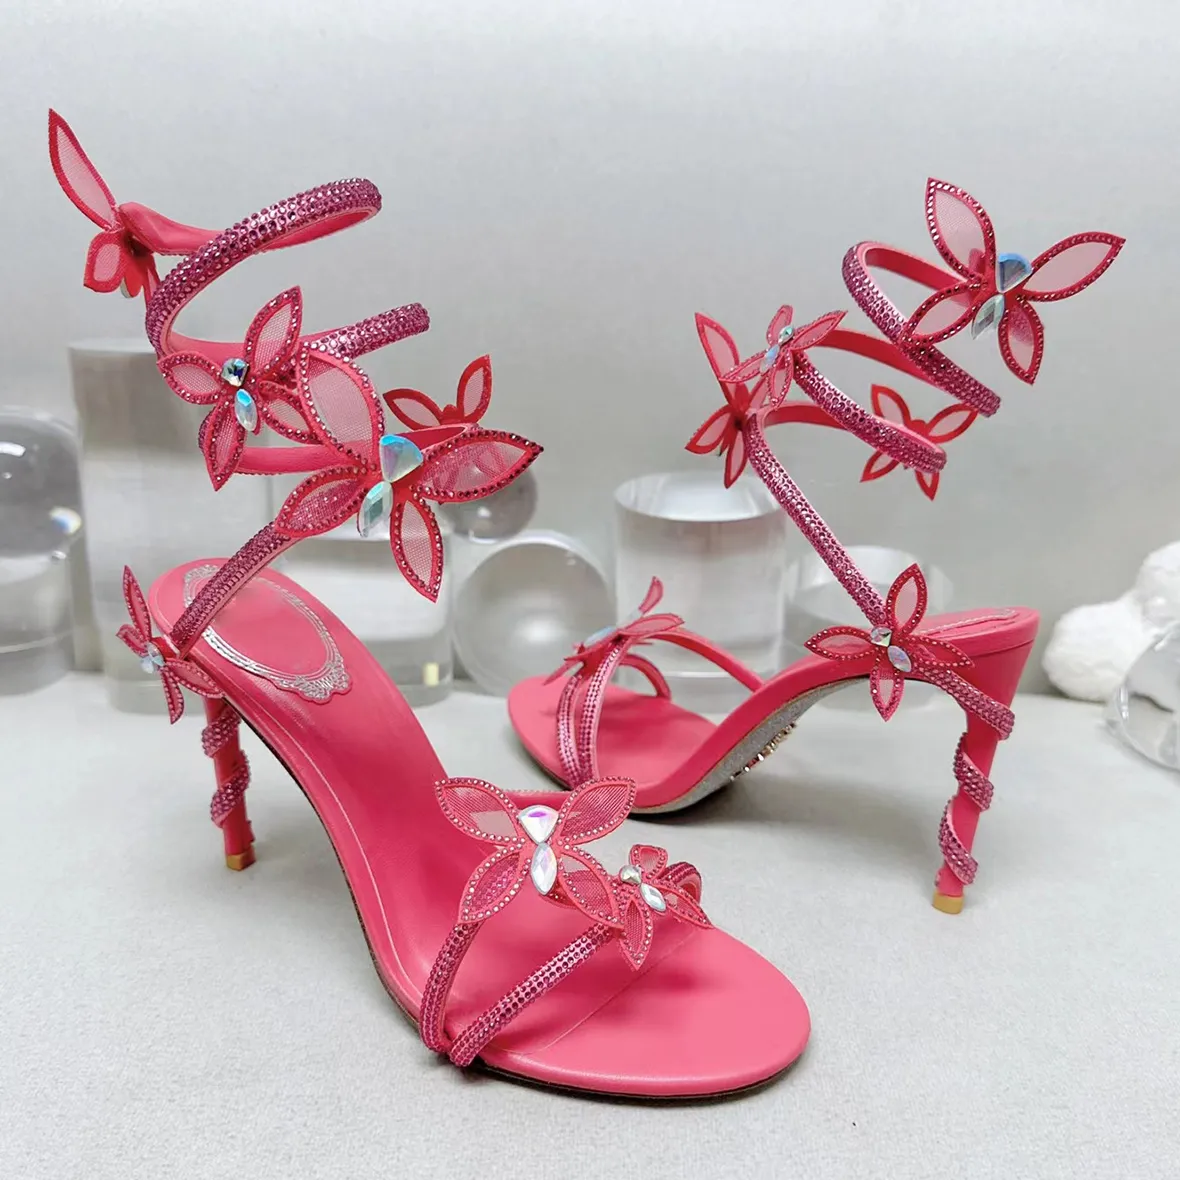 Rene Caovilla Salto Alto Sandálias Femininas de Designer Sapatos Femininos 9,5 cm Serpentina Envolvente Laço Cristal Moda Festa Salto Agulha Sapato Casamento